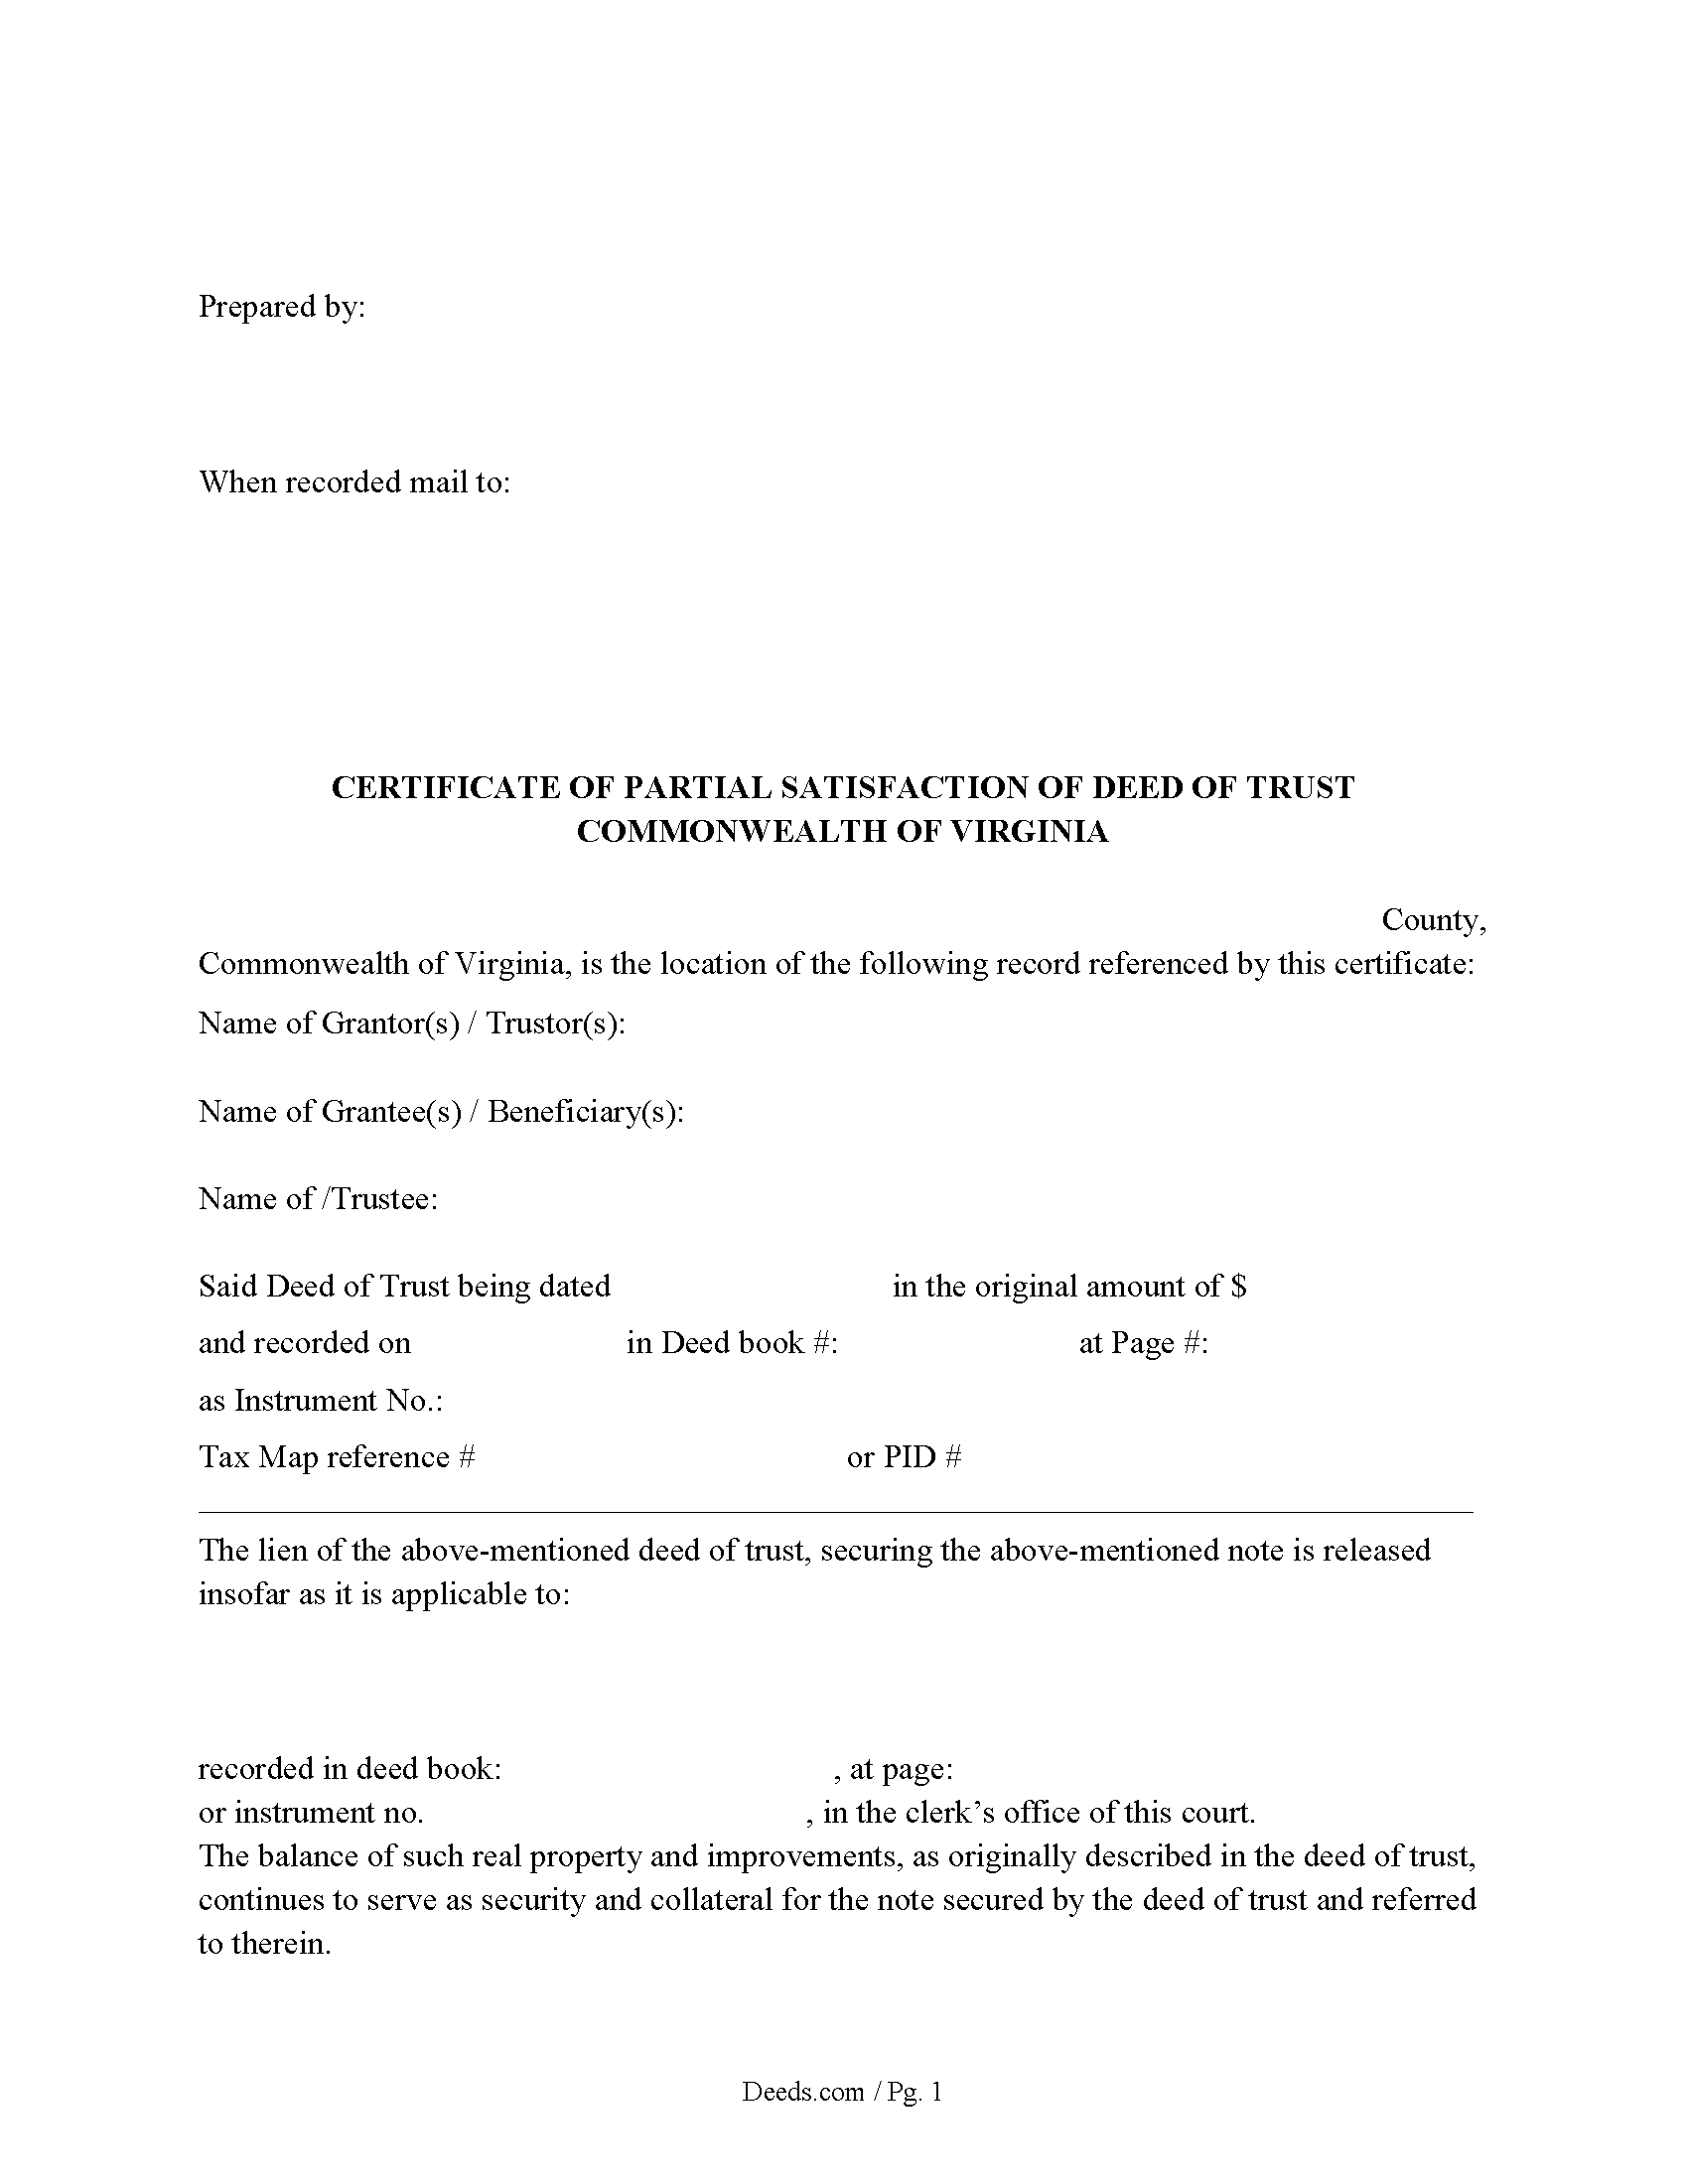 Certificate of Partial Satisfaction of Deed of Trust Form